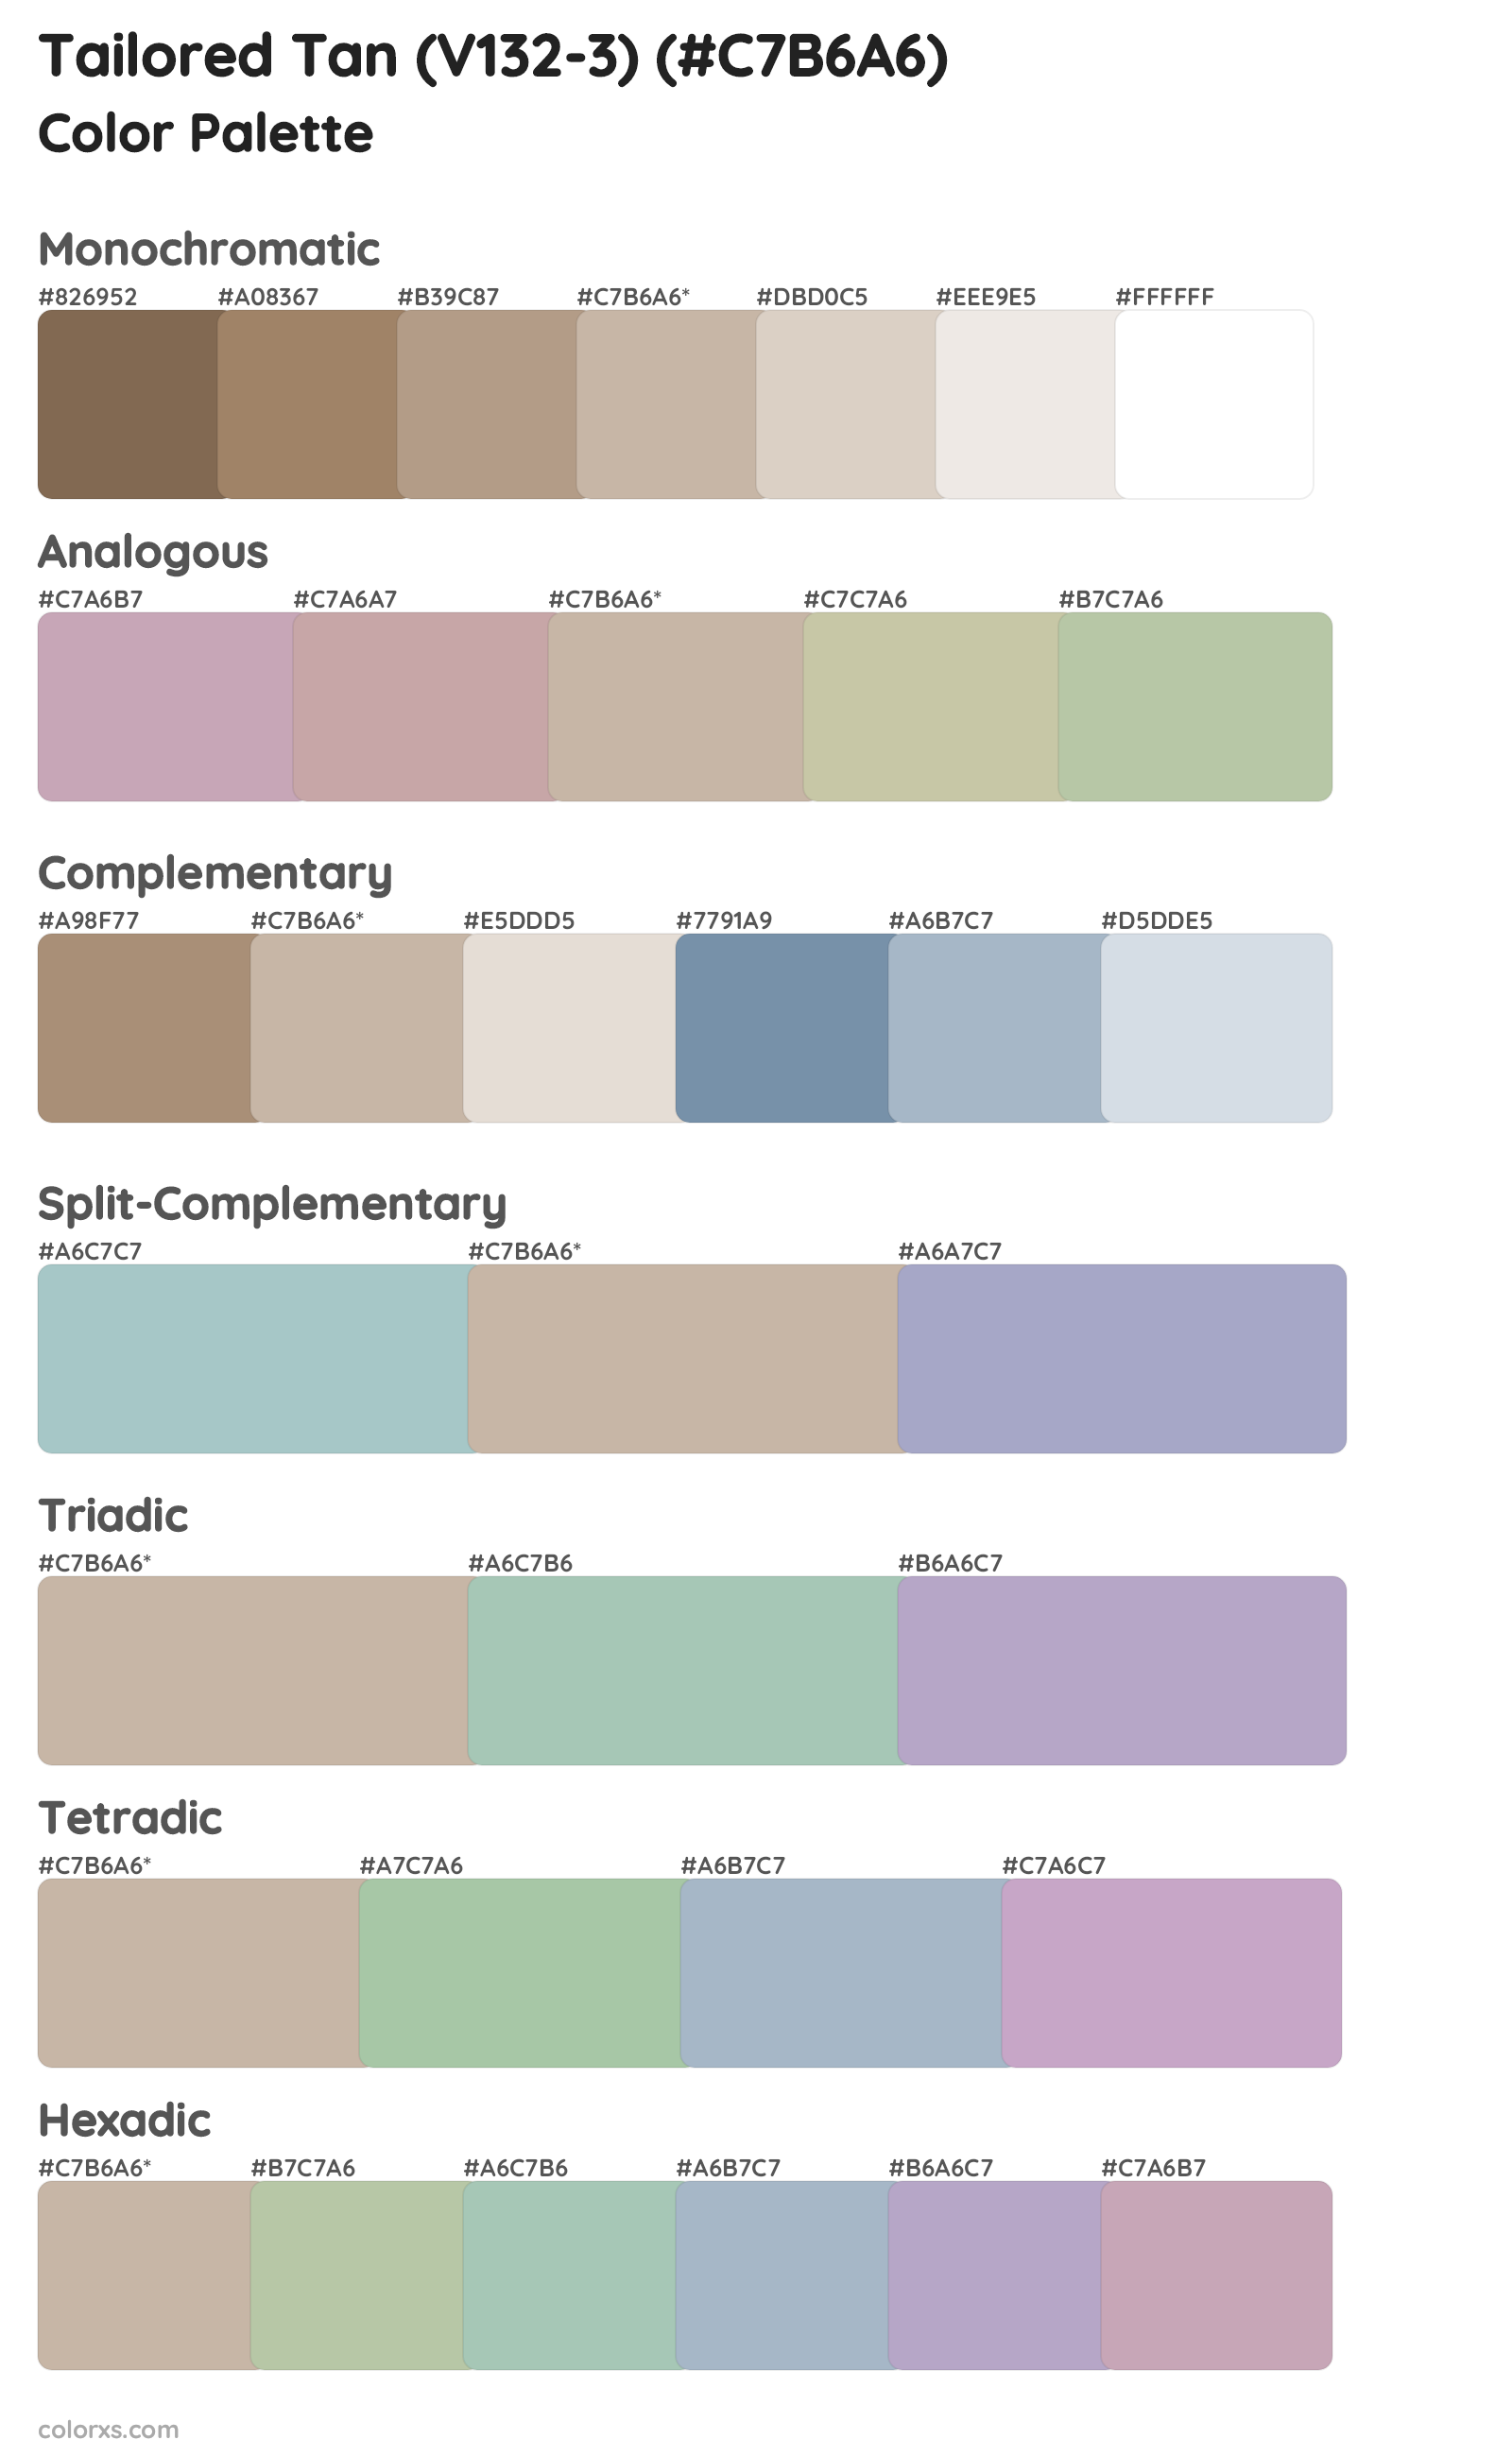 Tailored Tan (V132-3) Color Scheme Palettes